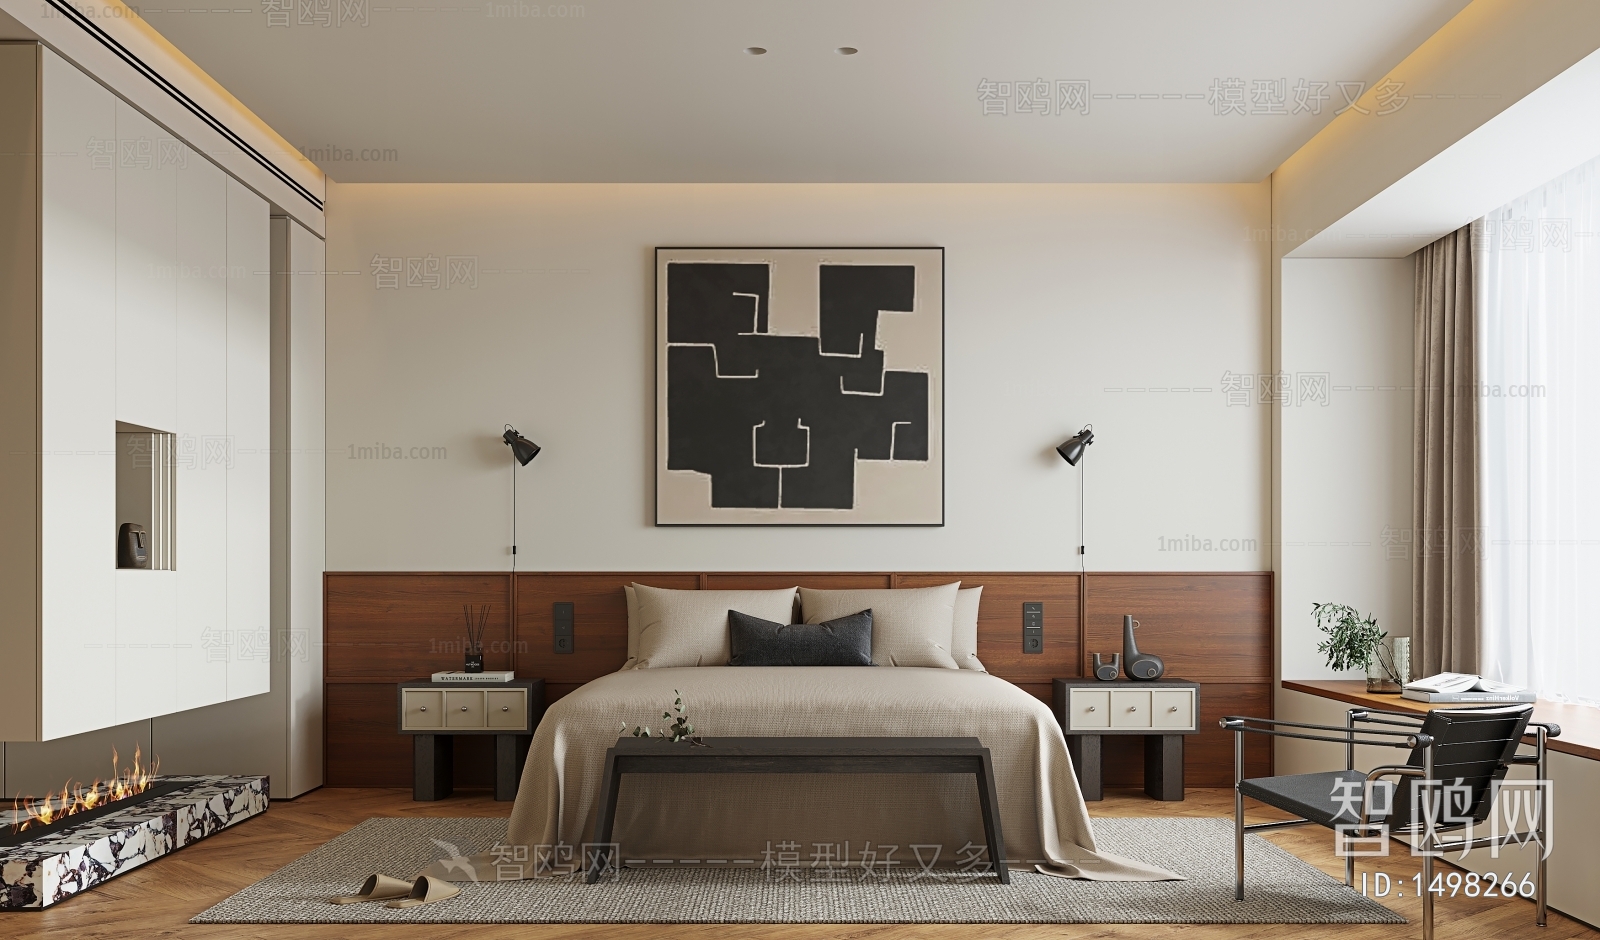 Chinese Style Wabi-sabi Style Bedroom